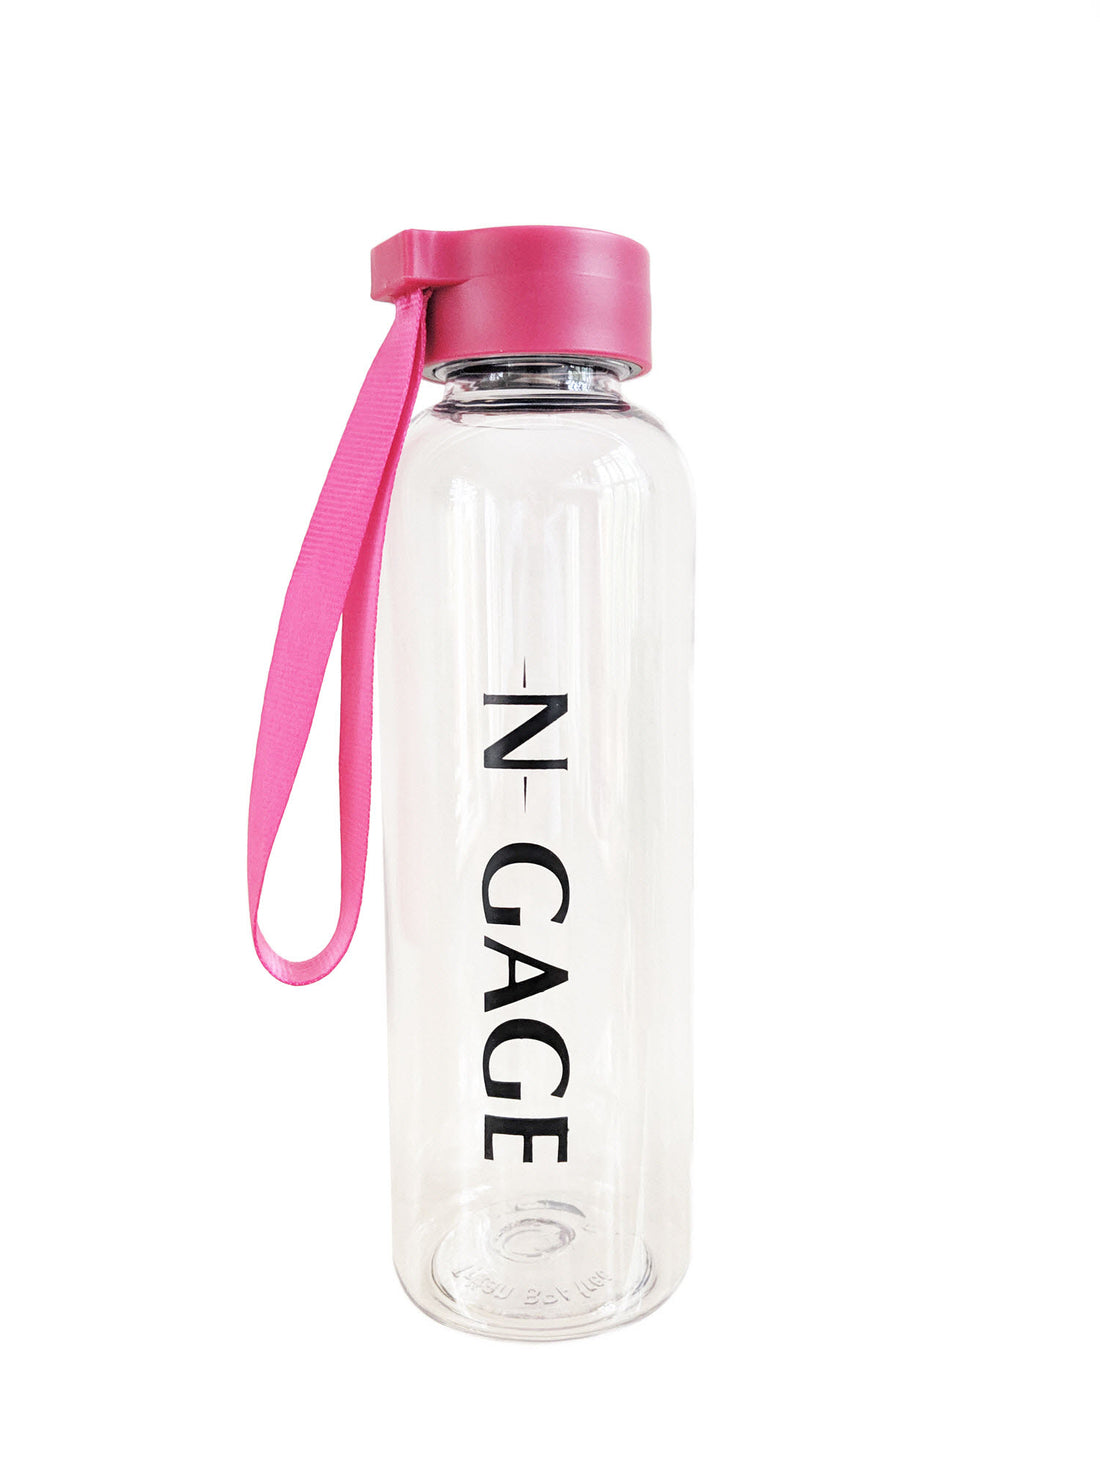 n-gage bpa free water bottle